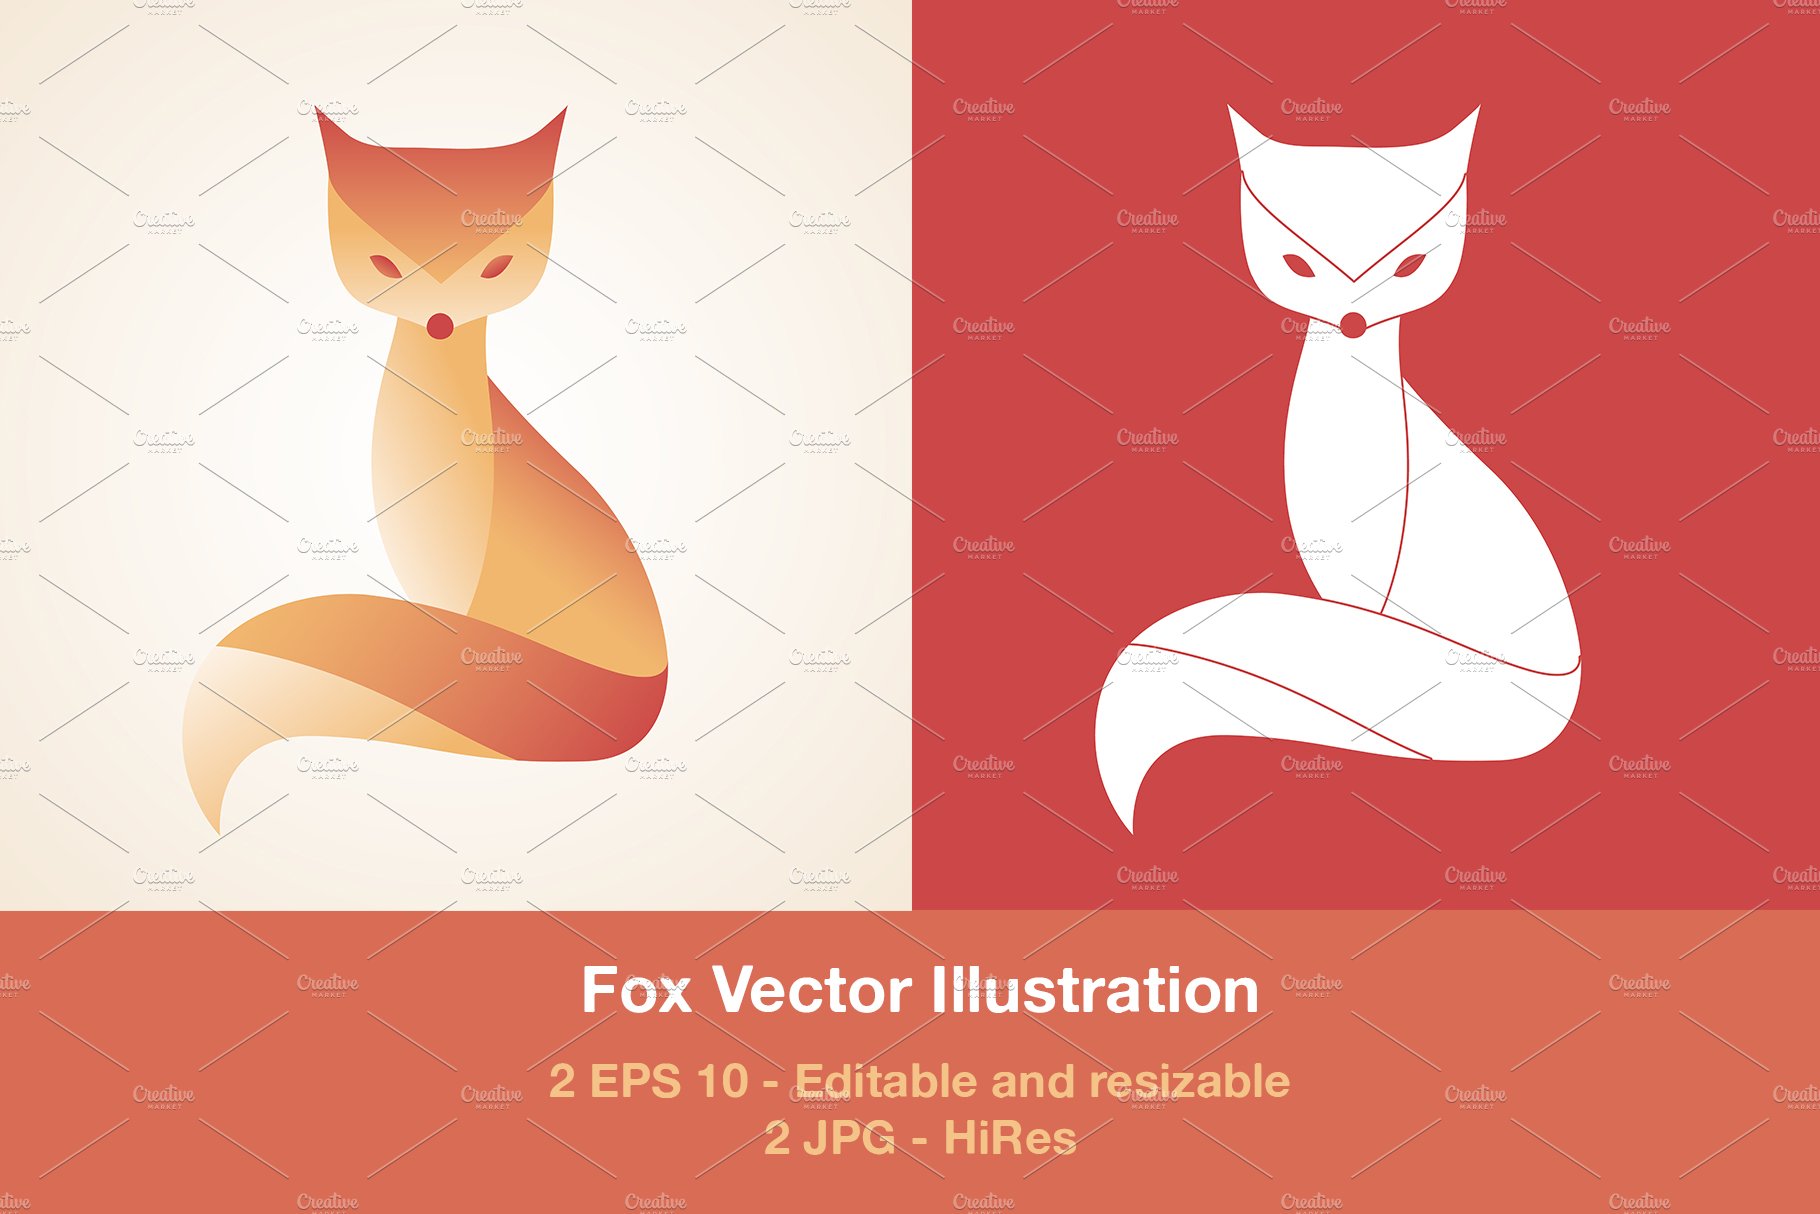 Fox Vector Illustration cover image.